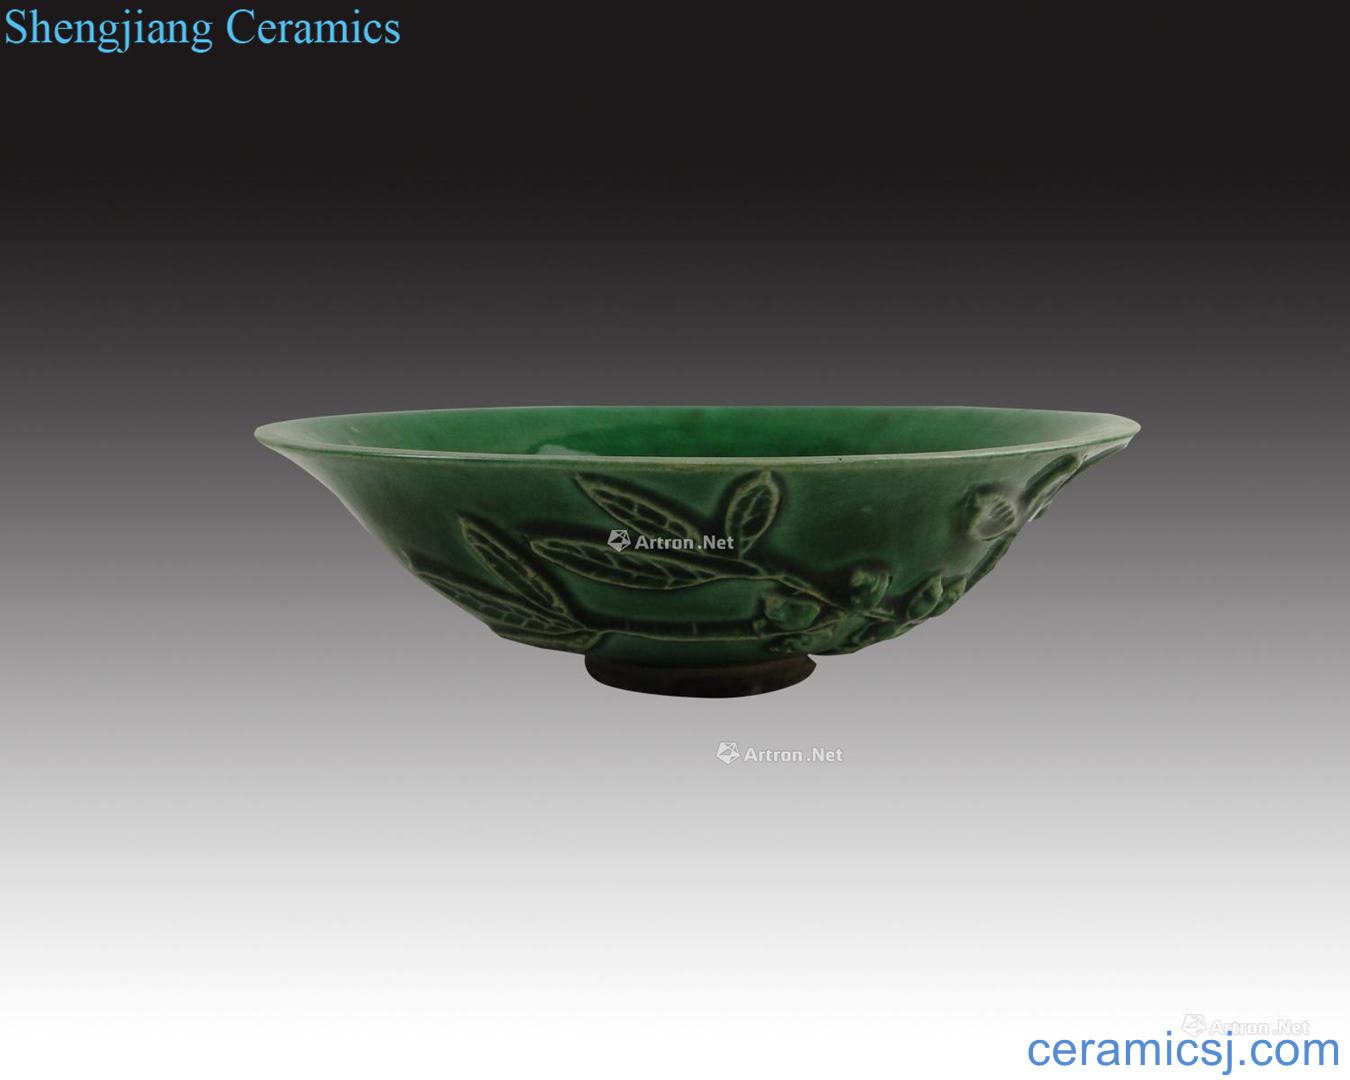 The song dynasty Green glaze flower bowl